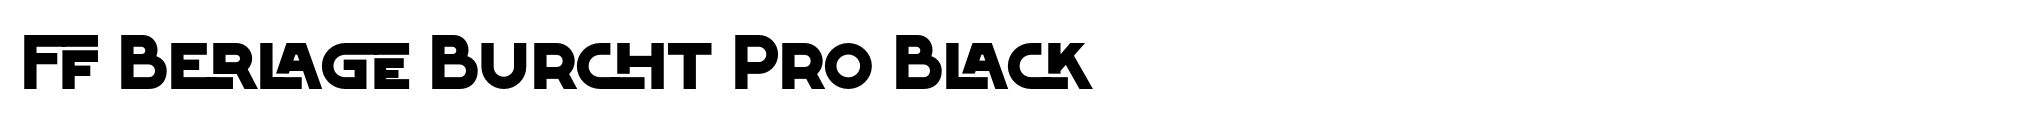 FF Berlage Burcht Pro Black image